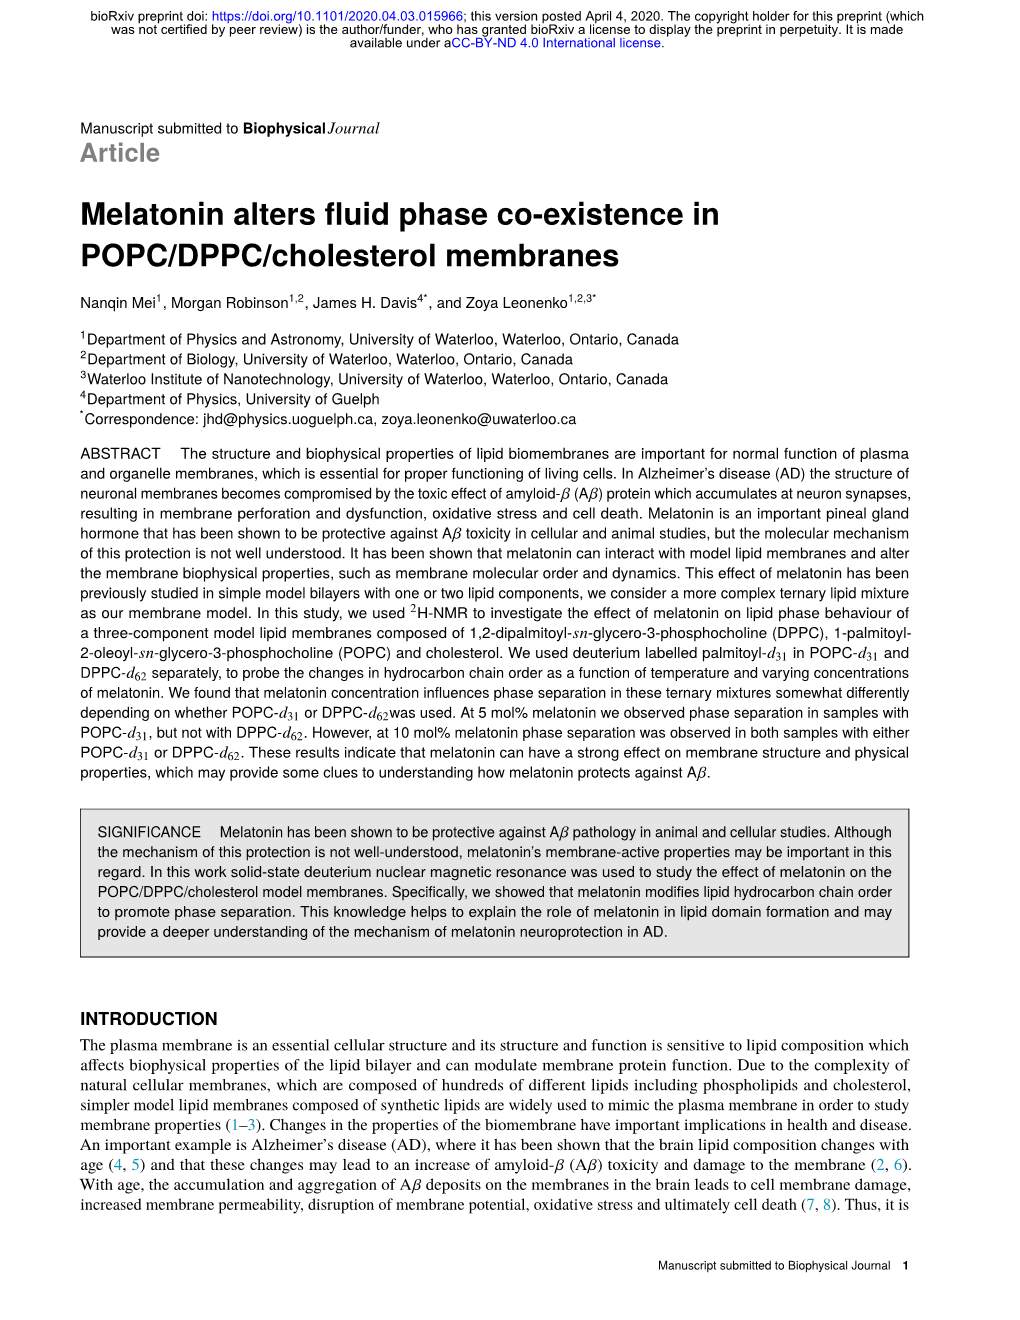 Melatonin Alters Fluid Phase Co-Existence in POPC/DPPC